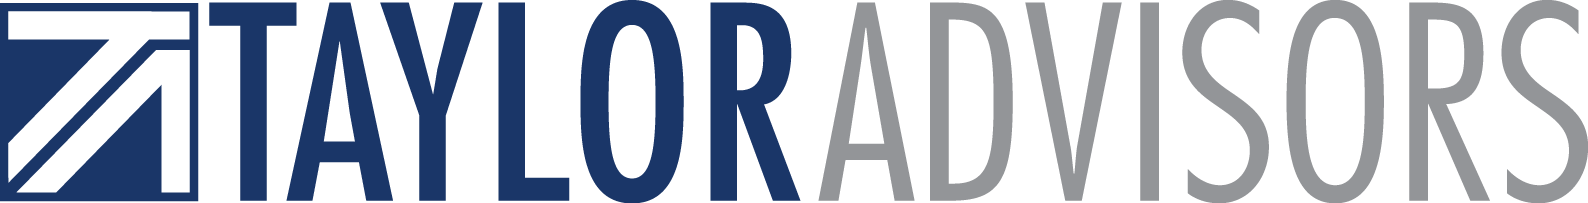 Taylor Advisors Logo